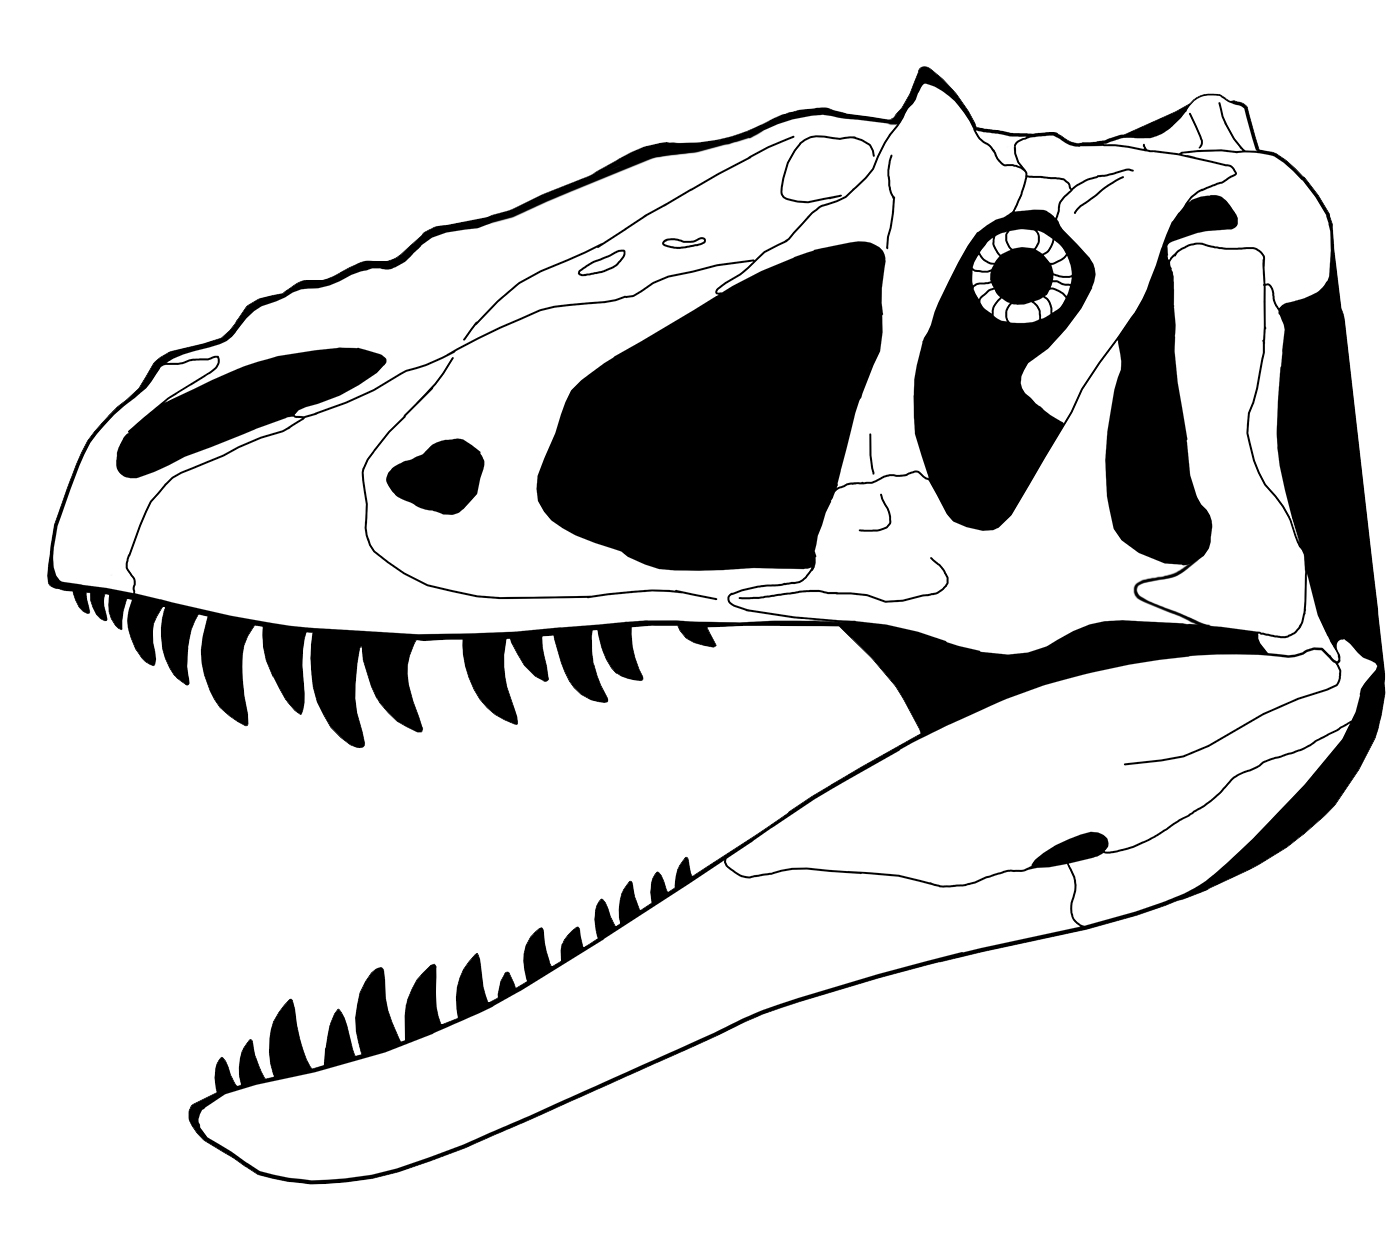 Skeleton clipart jpeg.  collection of dinosaur